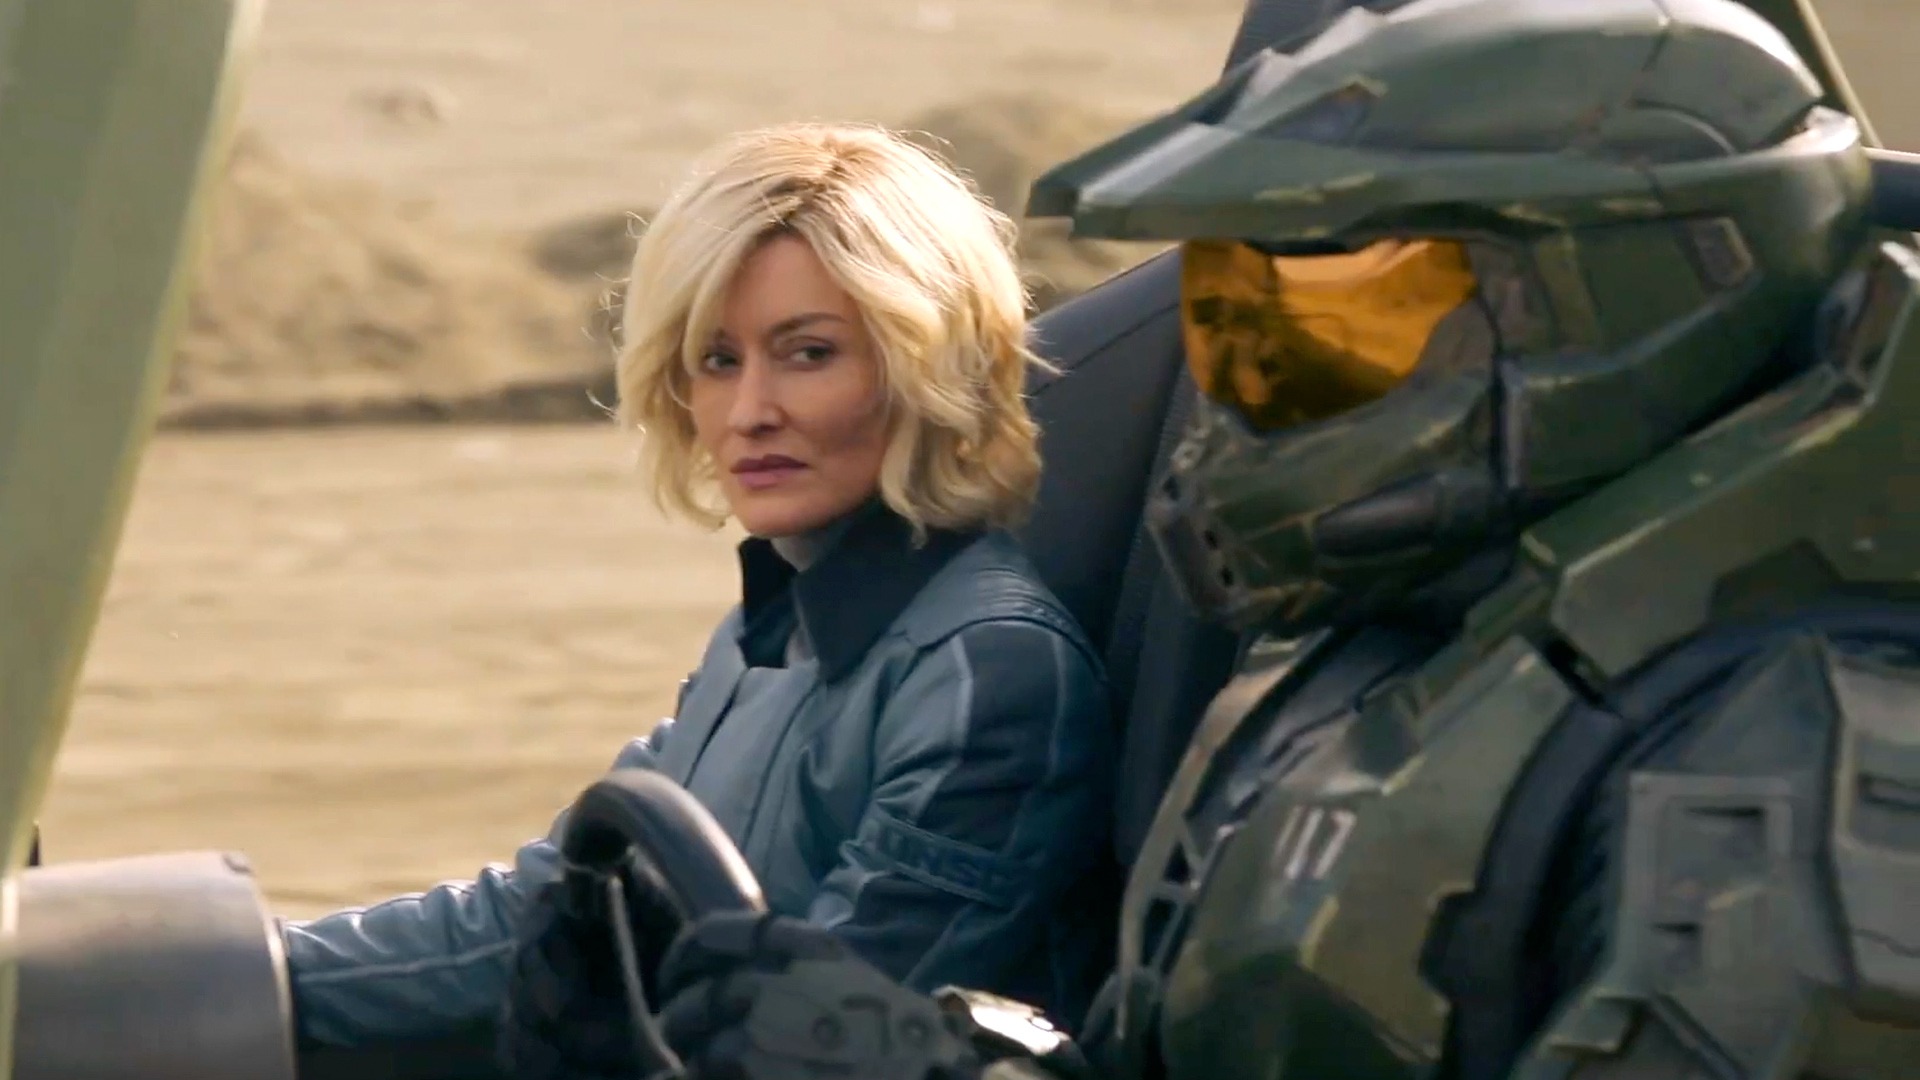 Watch Halo Season 1 Episode 2: Unbound - Full show on Paramount Plus